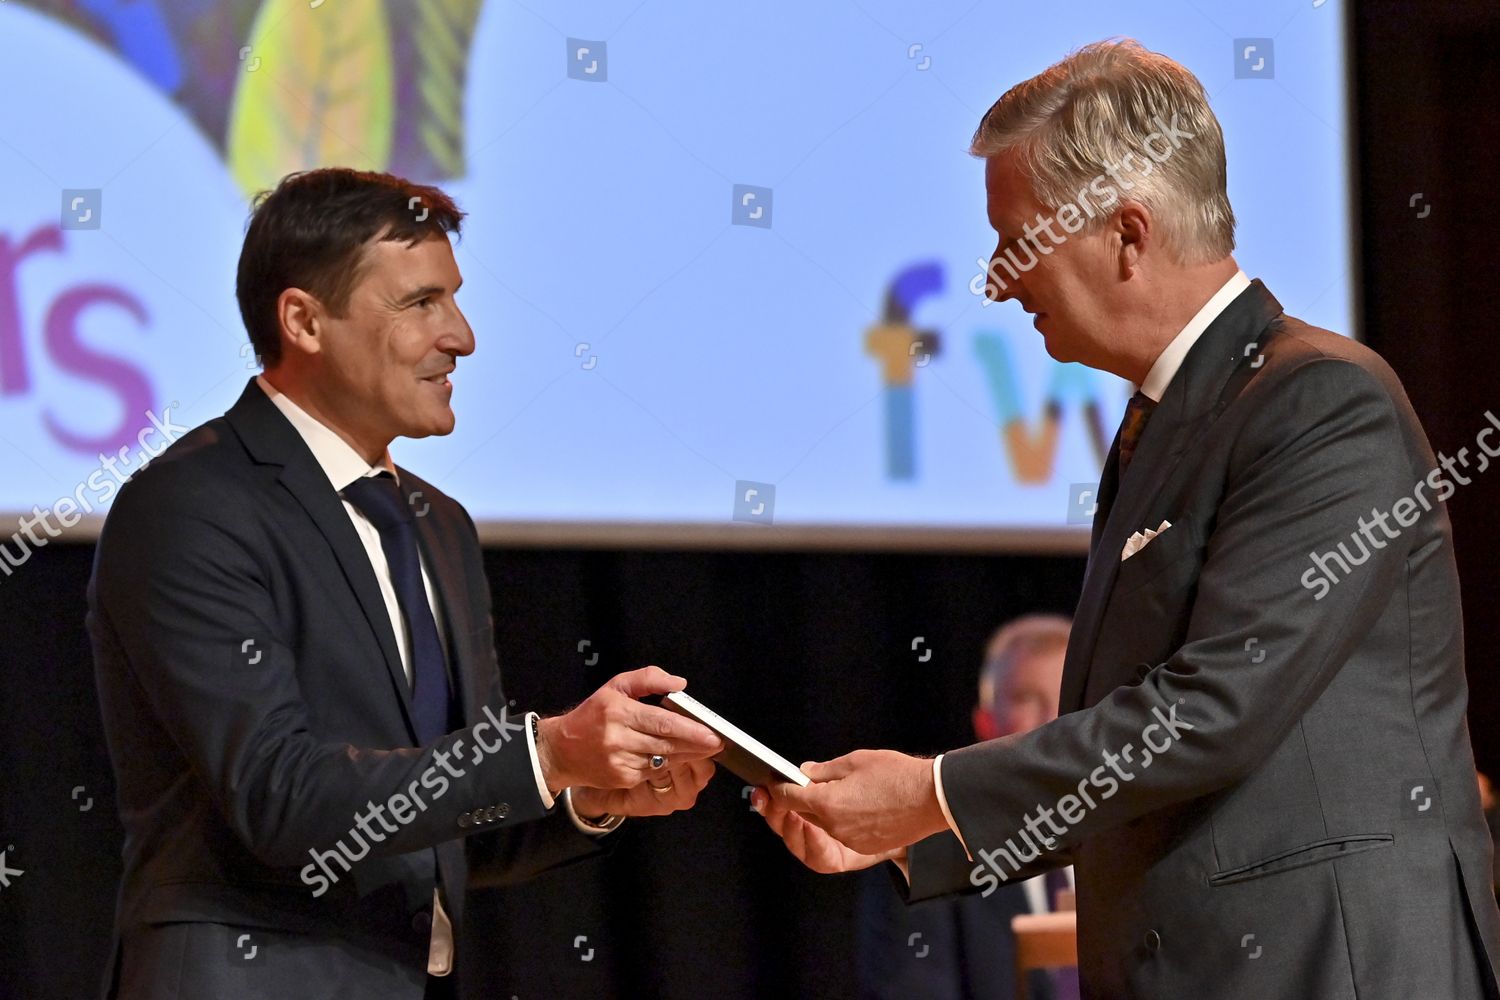 science-royals-scientific-excellence-awards-brussels-belgium-shutterstock-editorial-12523234f.jpg